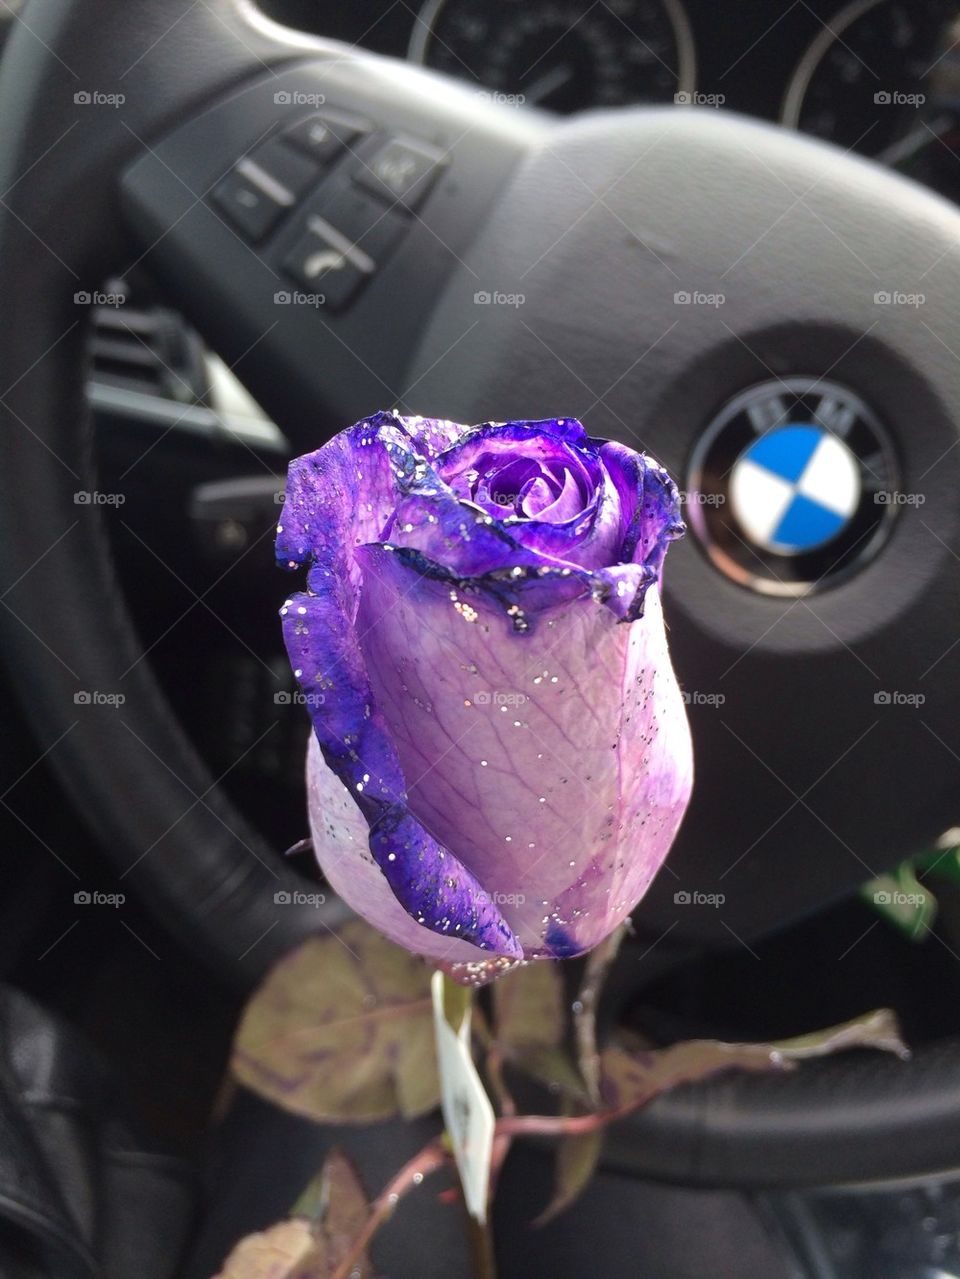 Purple rose